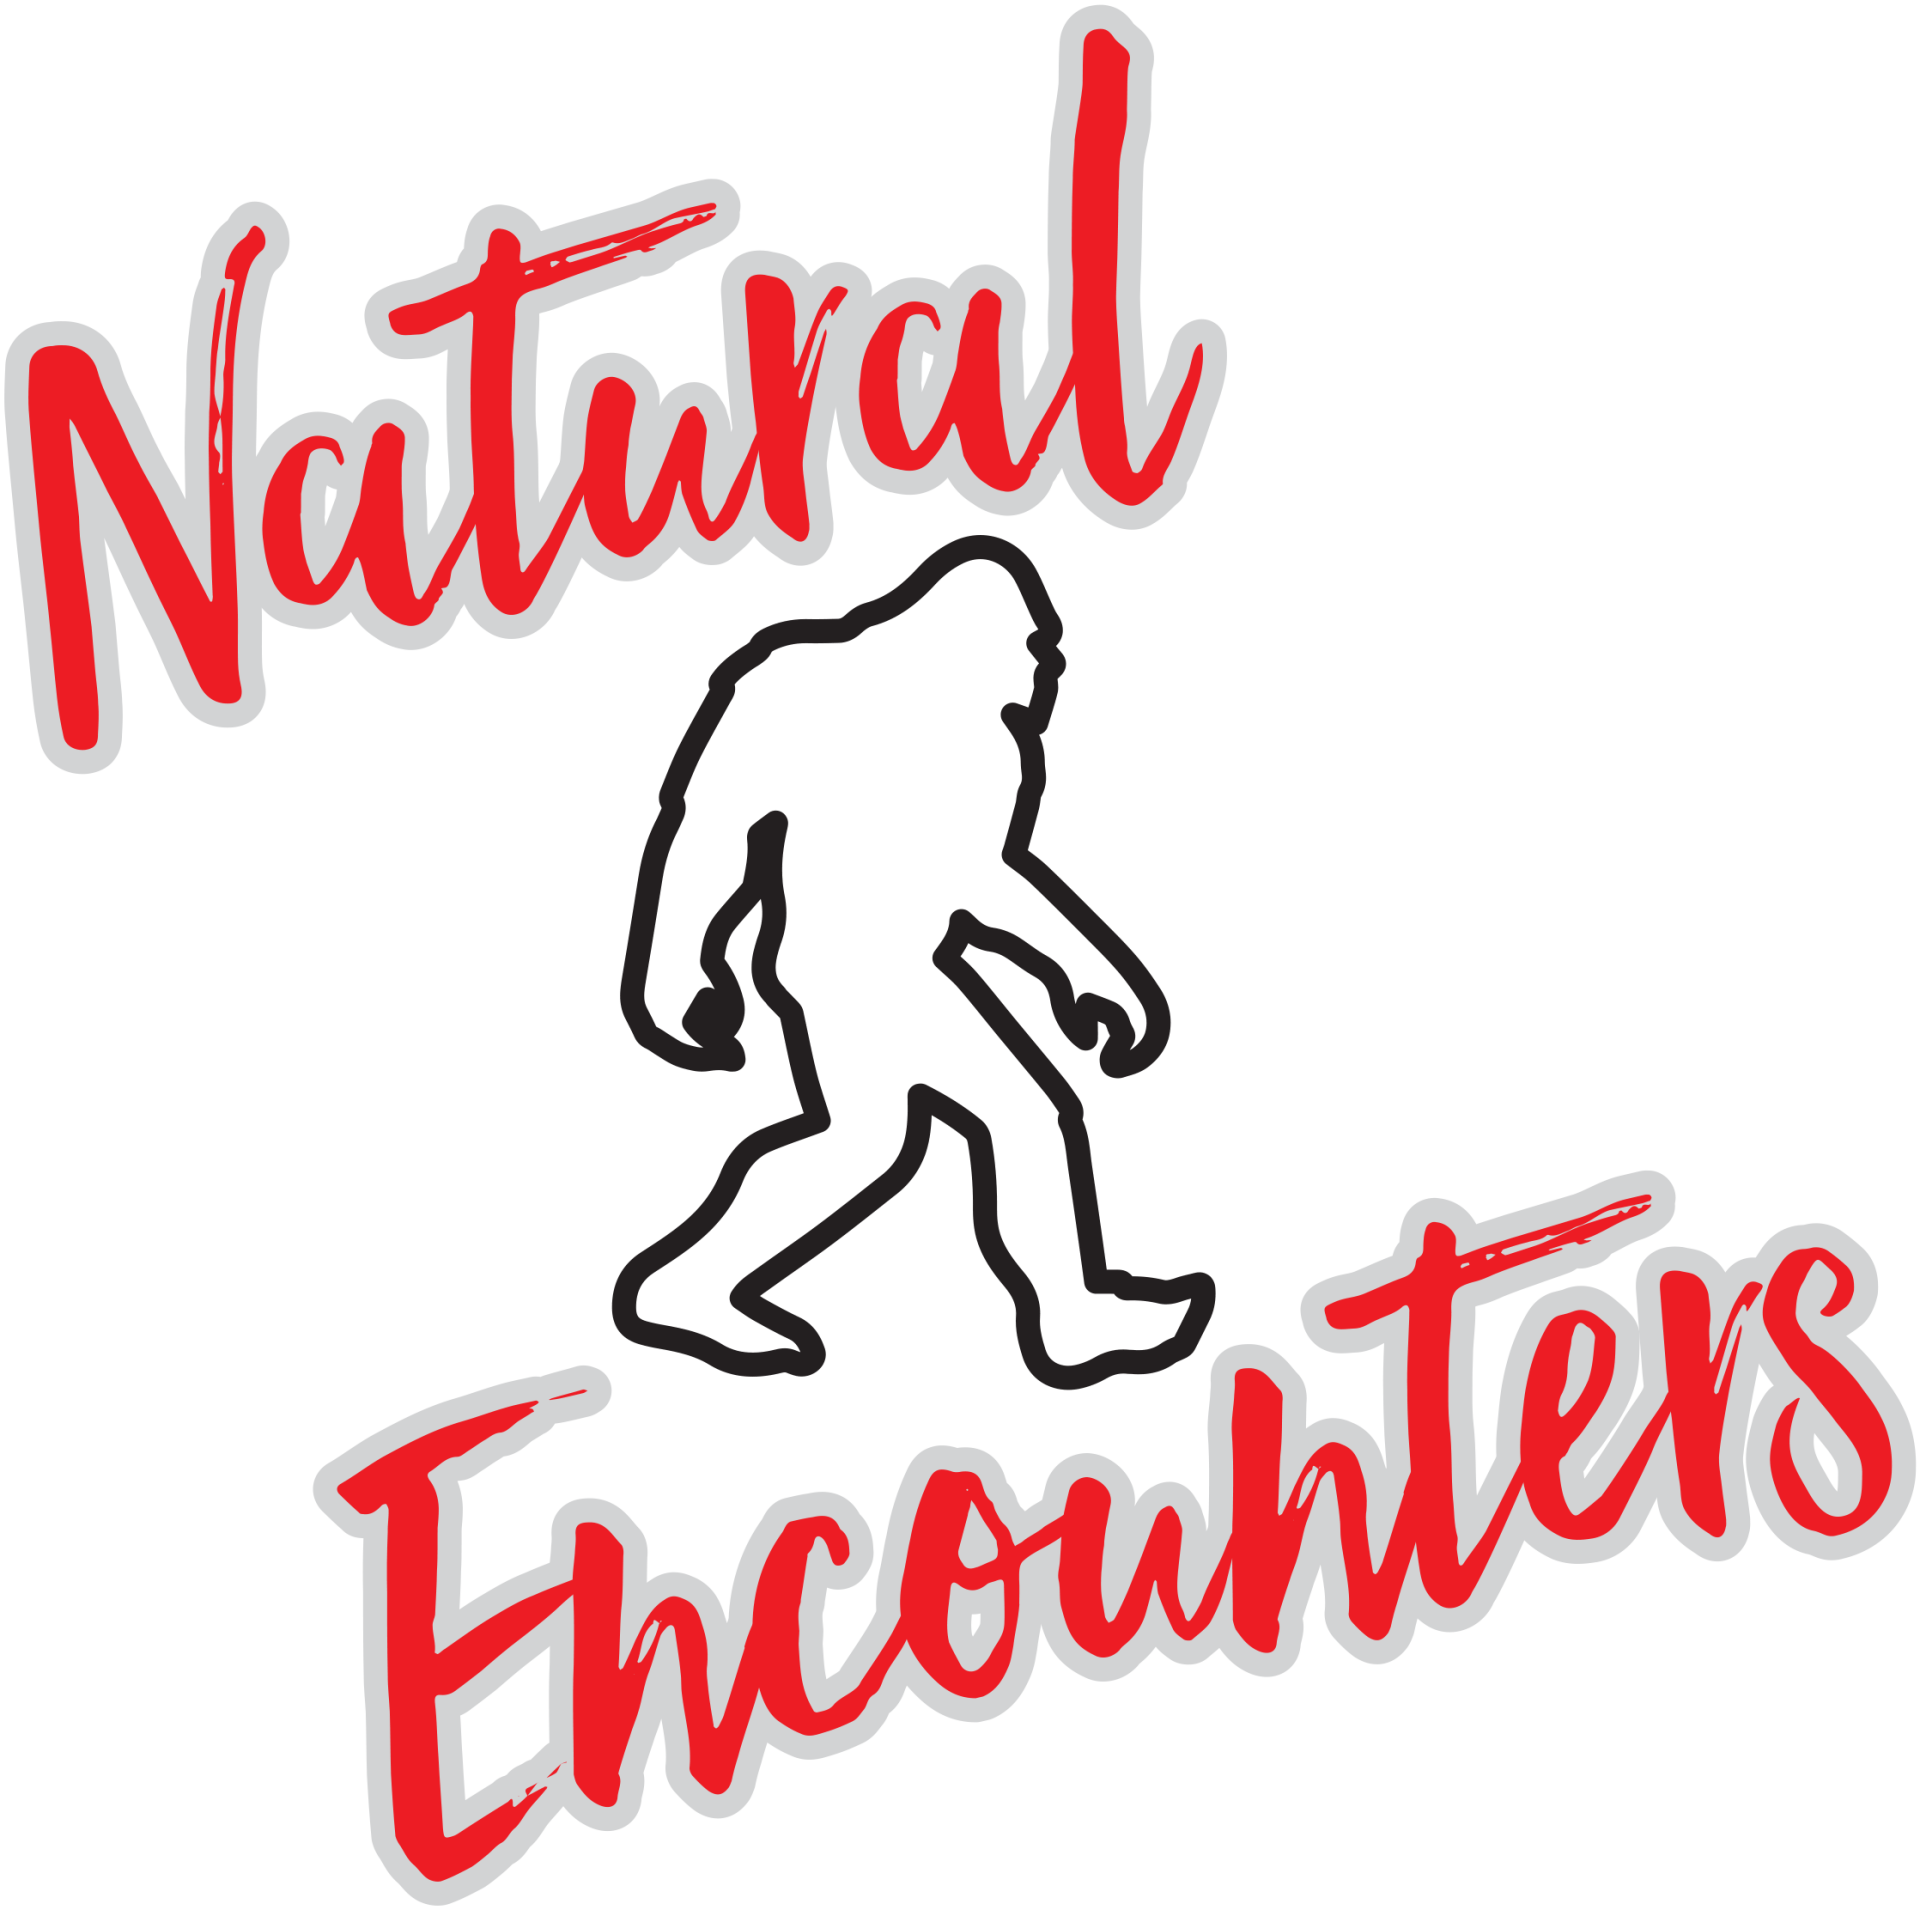 Natural Encounters LLC logo